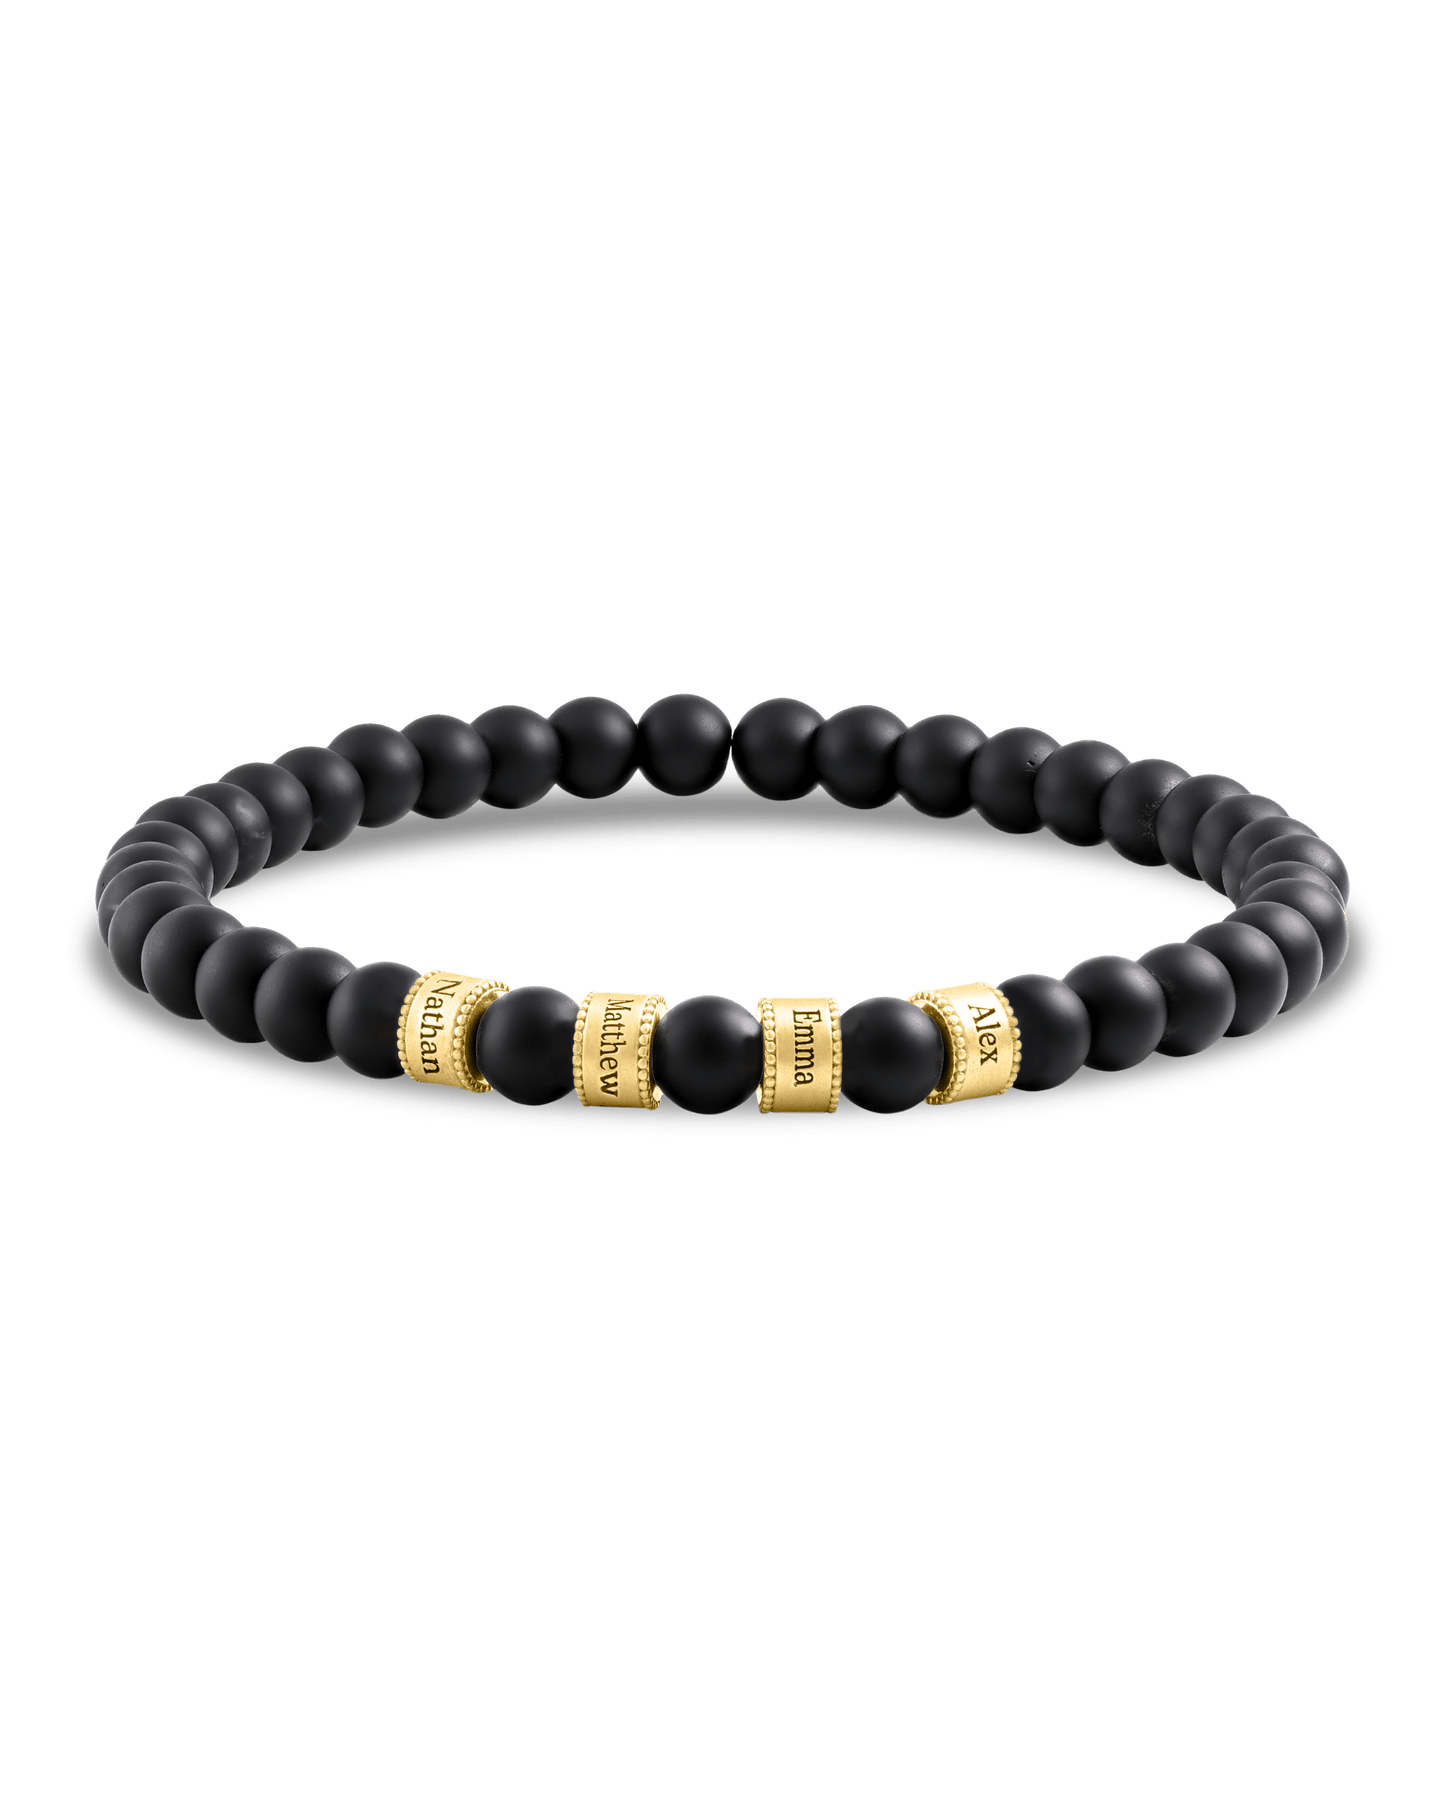 Dad's Legacy Beads Bracelet w/ Turquoise Stones - 18K Gold Vermeil Bracelets magal-dev Black Onyx Gemstone 1 Charm 7.5" M/L Wrist